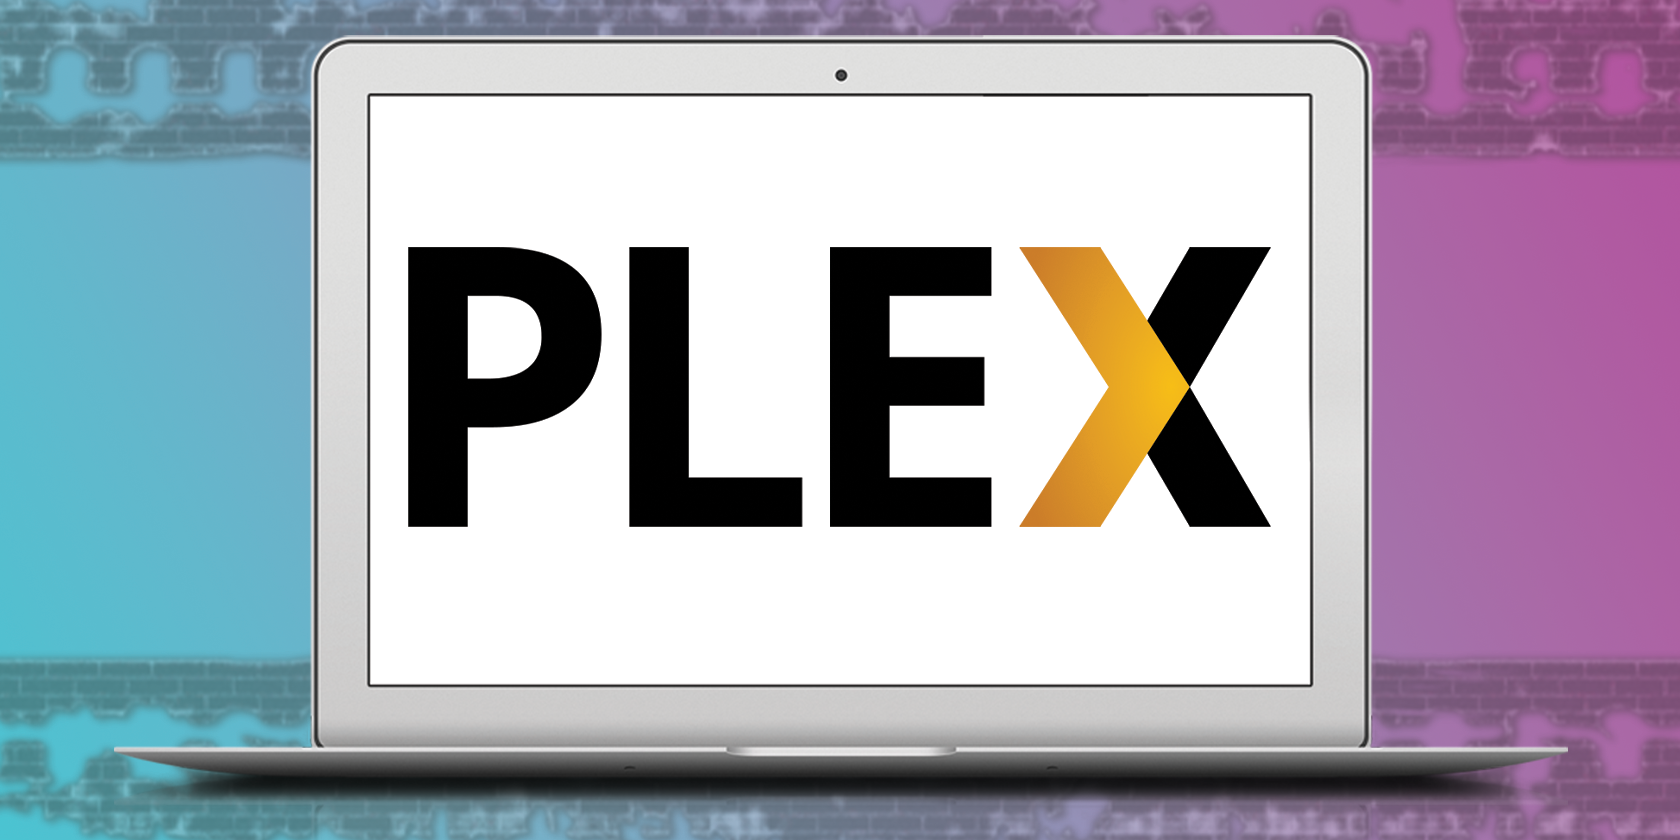 plex media platform on laptop